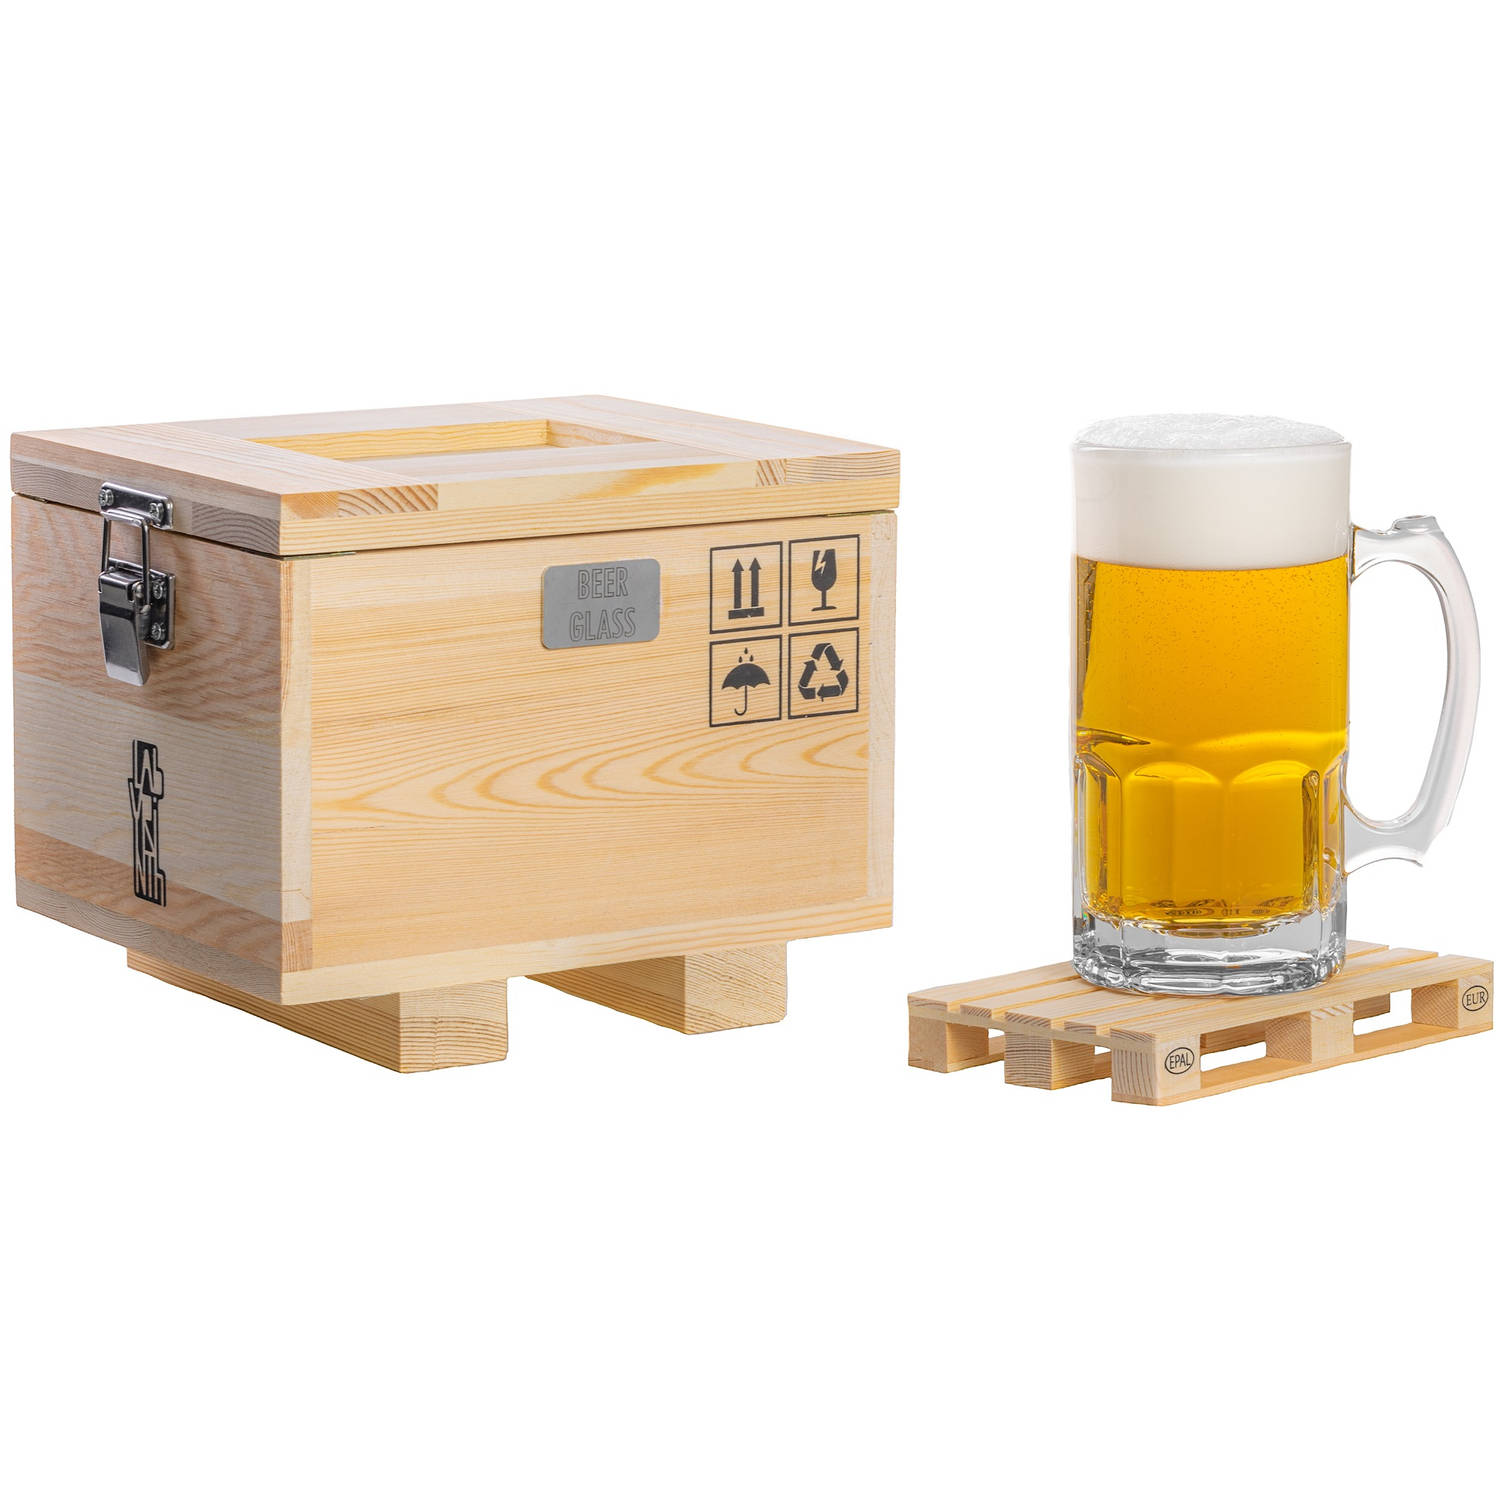 Labyrinth® MEGA Bierglas in houten kist (27x21x21 cm) met houten onderzetter 1 liter bierpul Bier ca